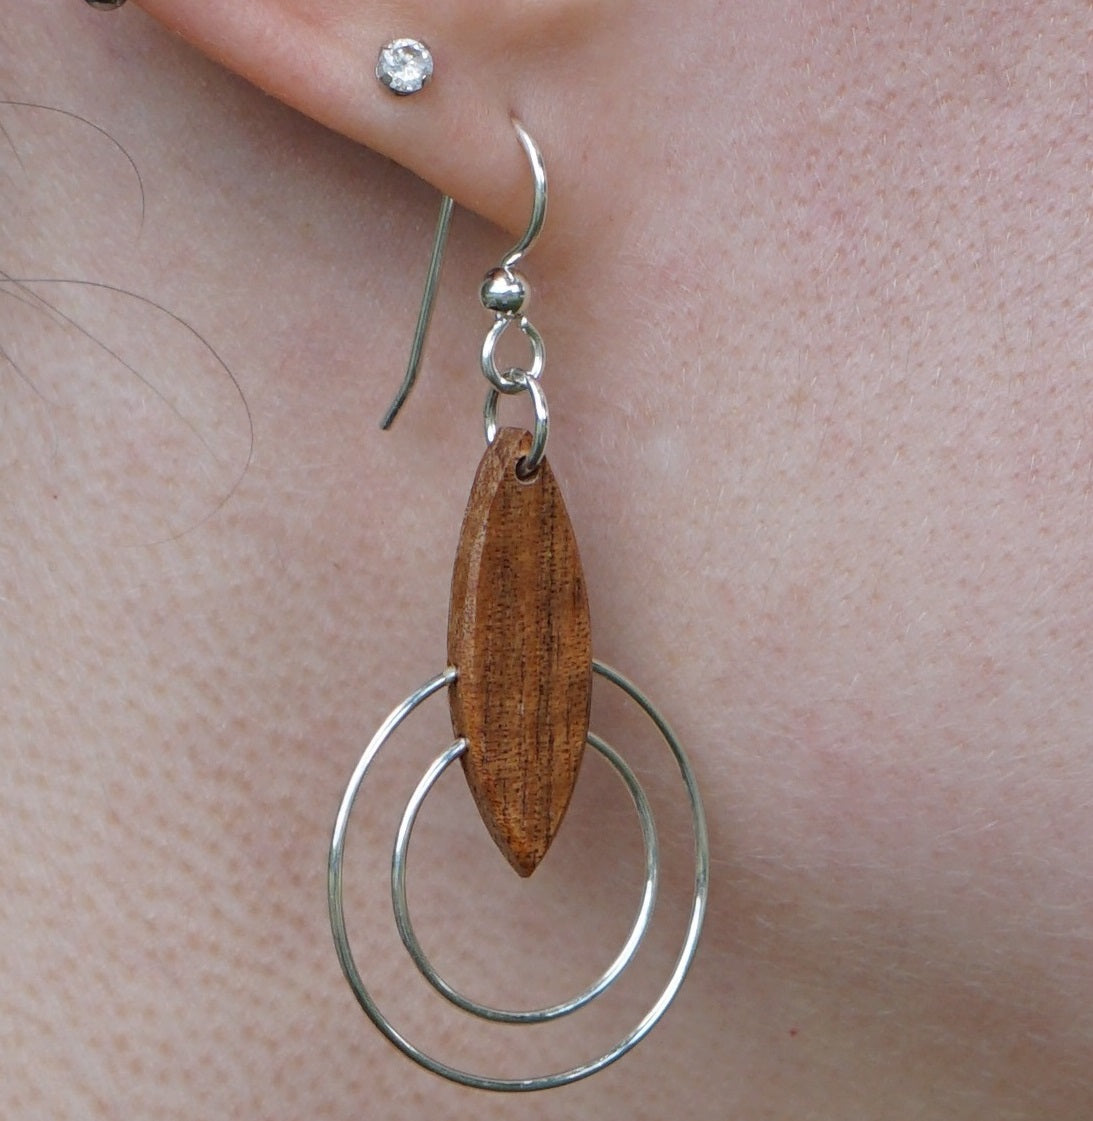 Koa  and silver double ring earrings on model